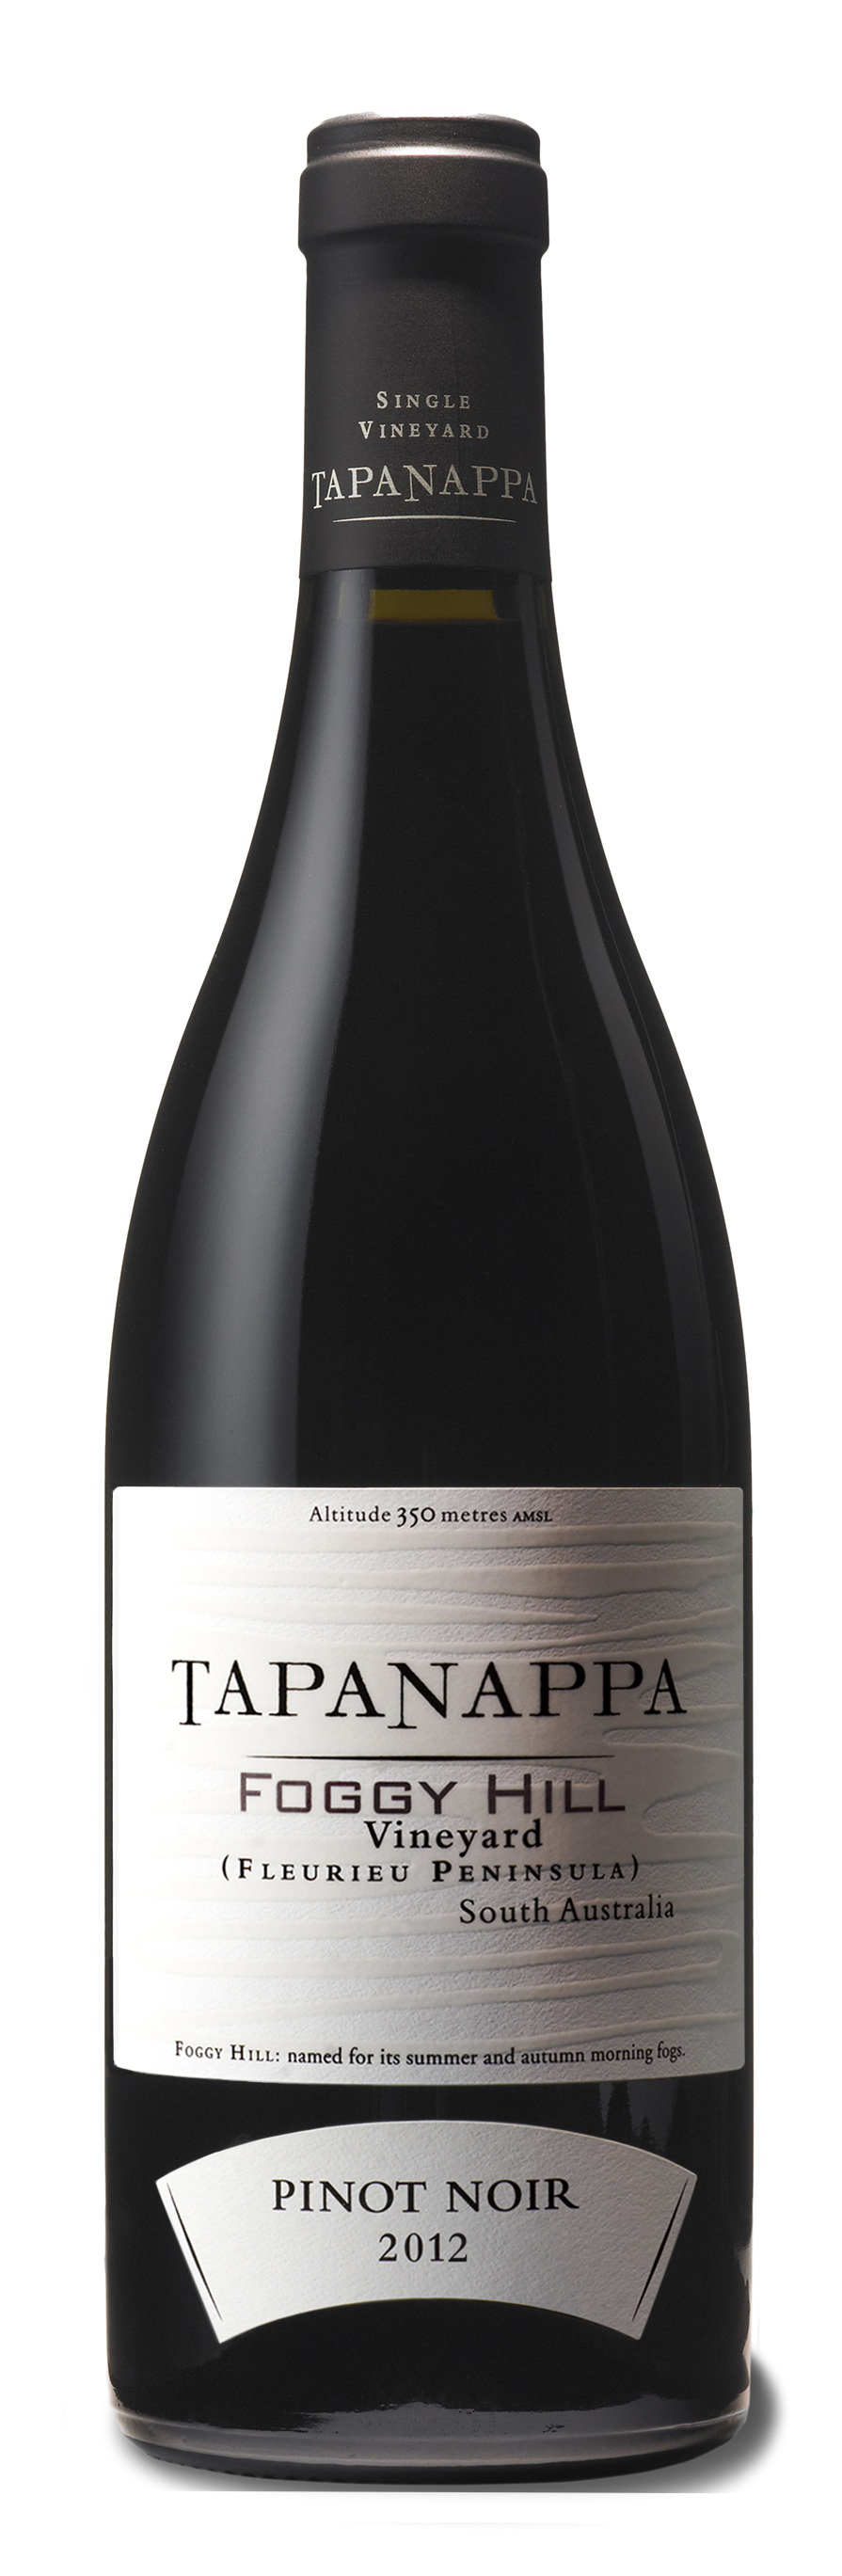 Tapanappa Foggy Hill Vineyard 2012 Pinot Noir bottleshot